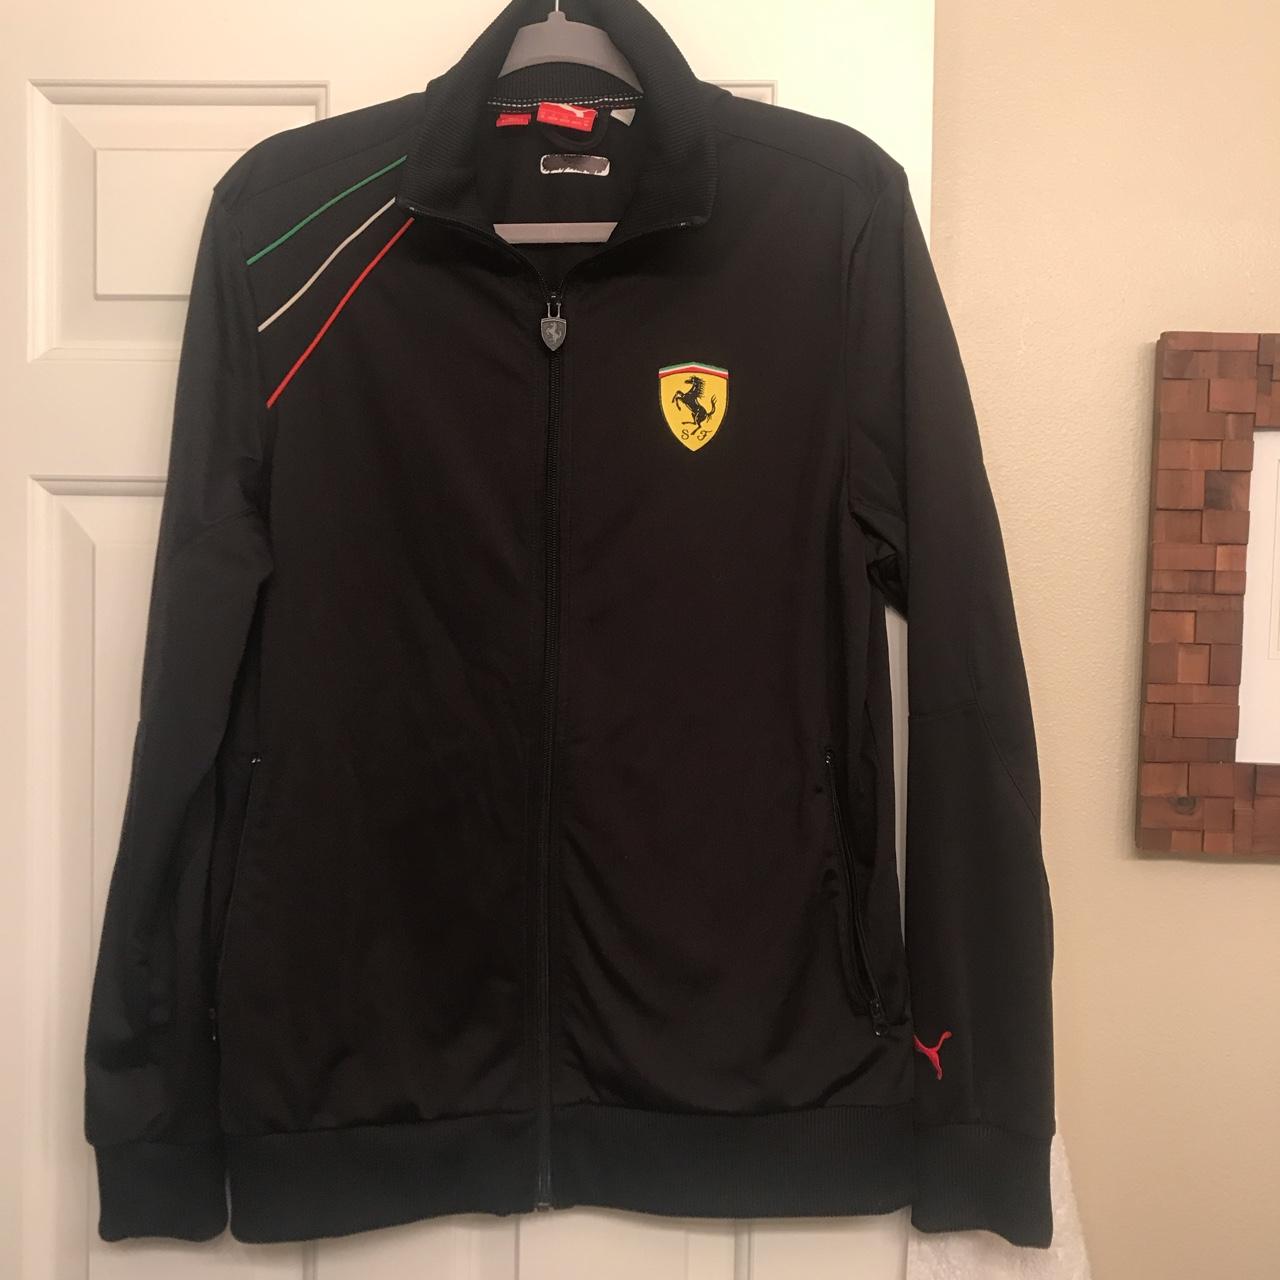 Puma/Ferrari sport jacket. Size men’s Medium. #Puma... - Depop